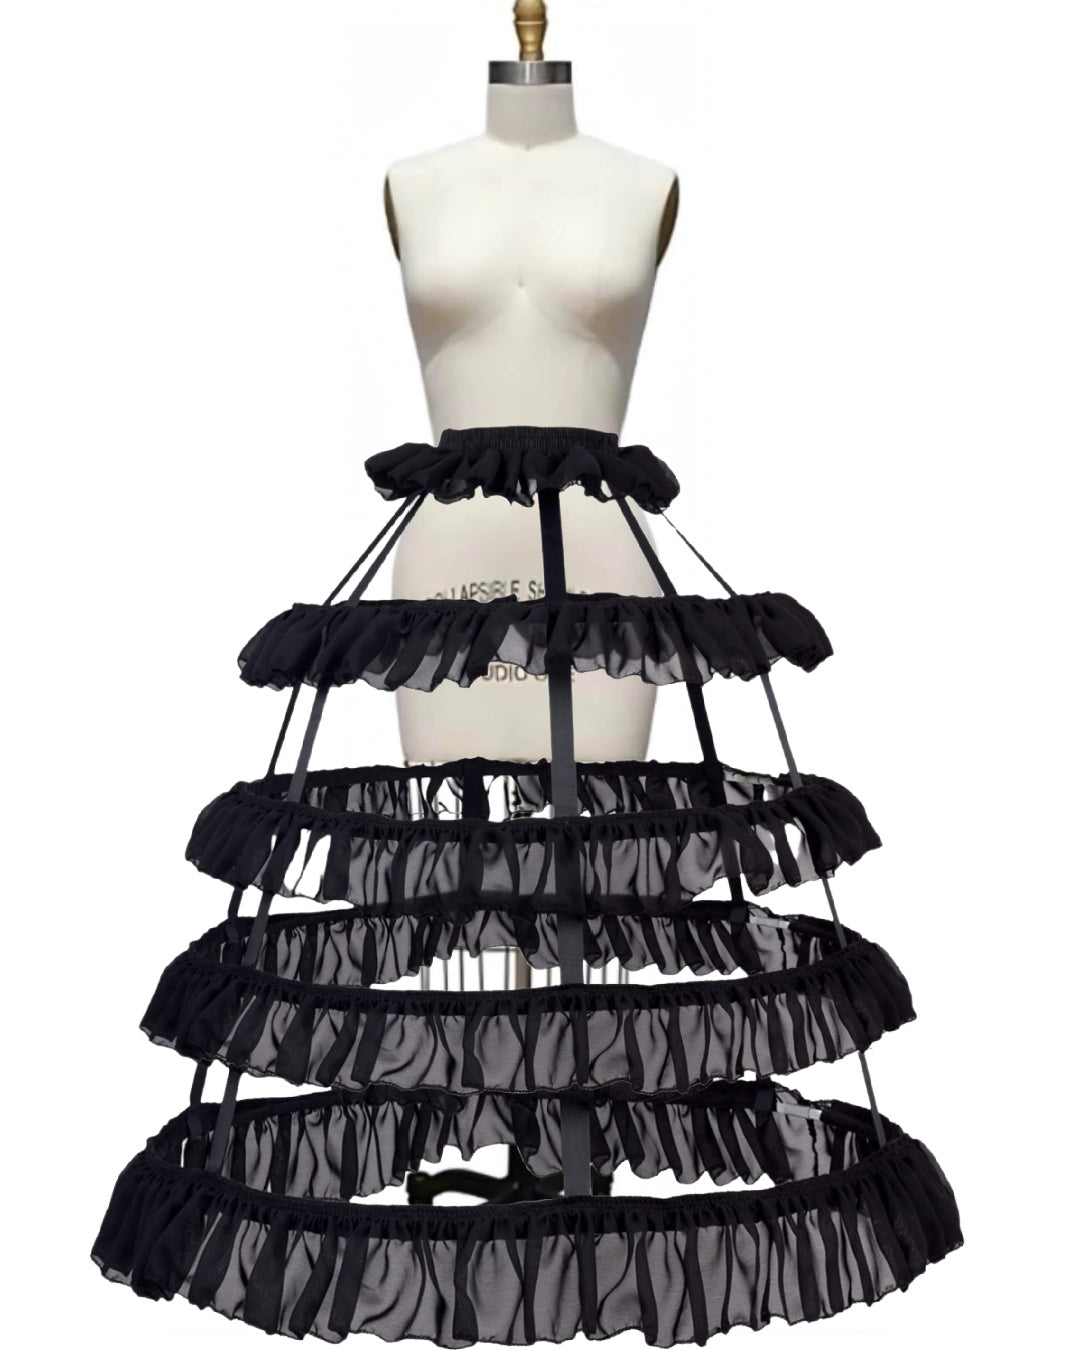 Hoopla- the Ruffled Cage Hoop Petticoat Skirt